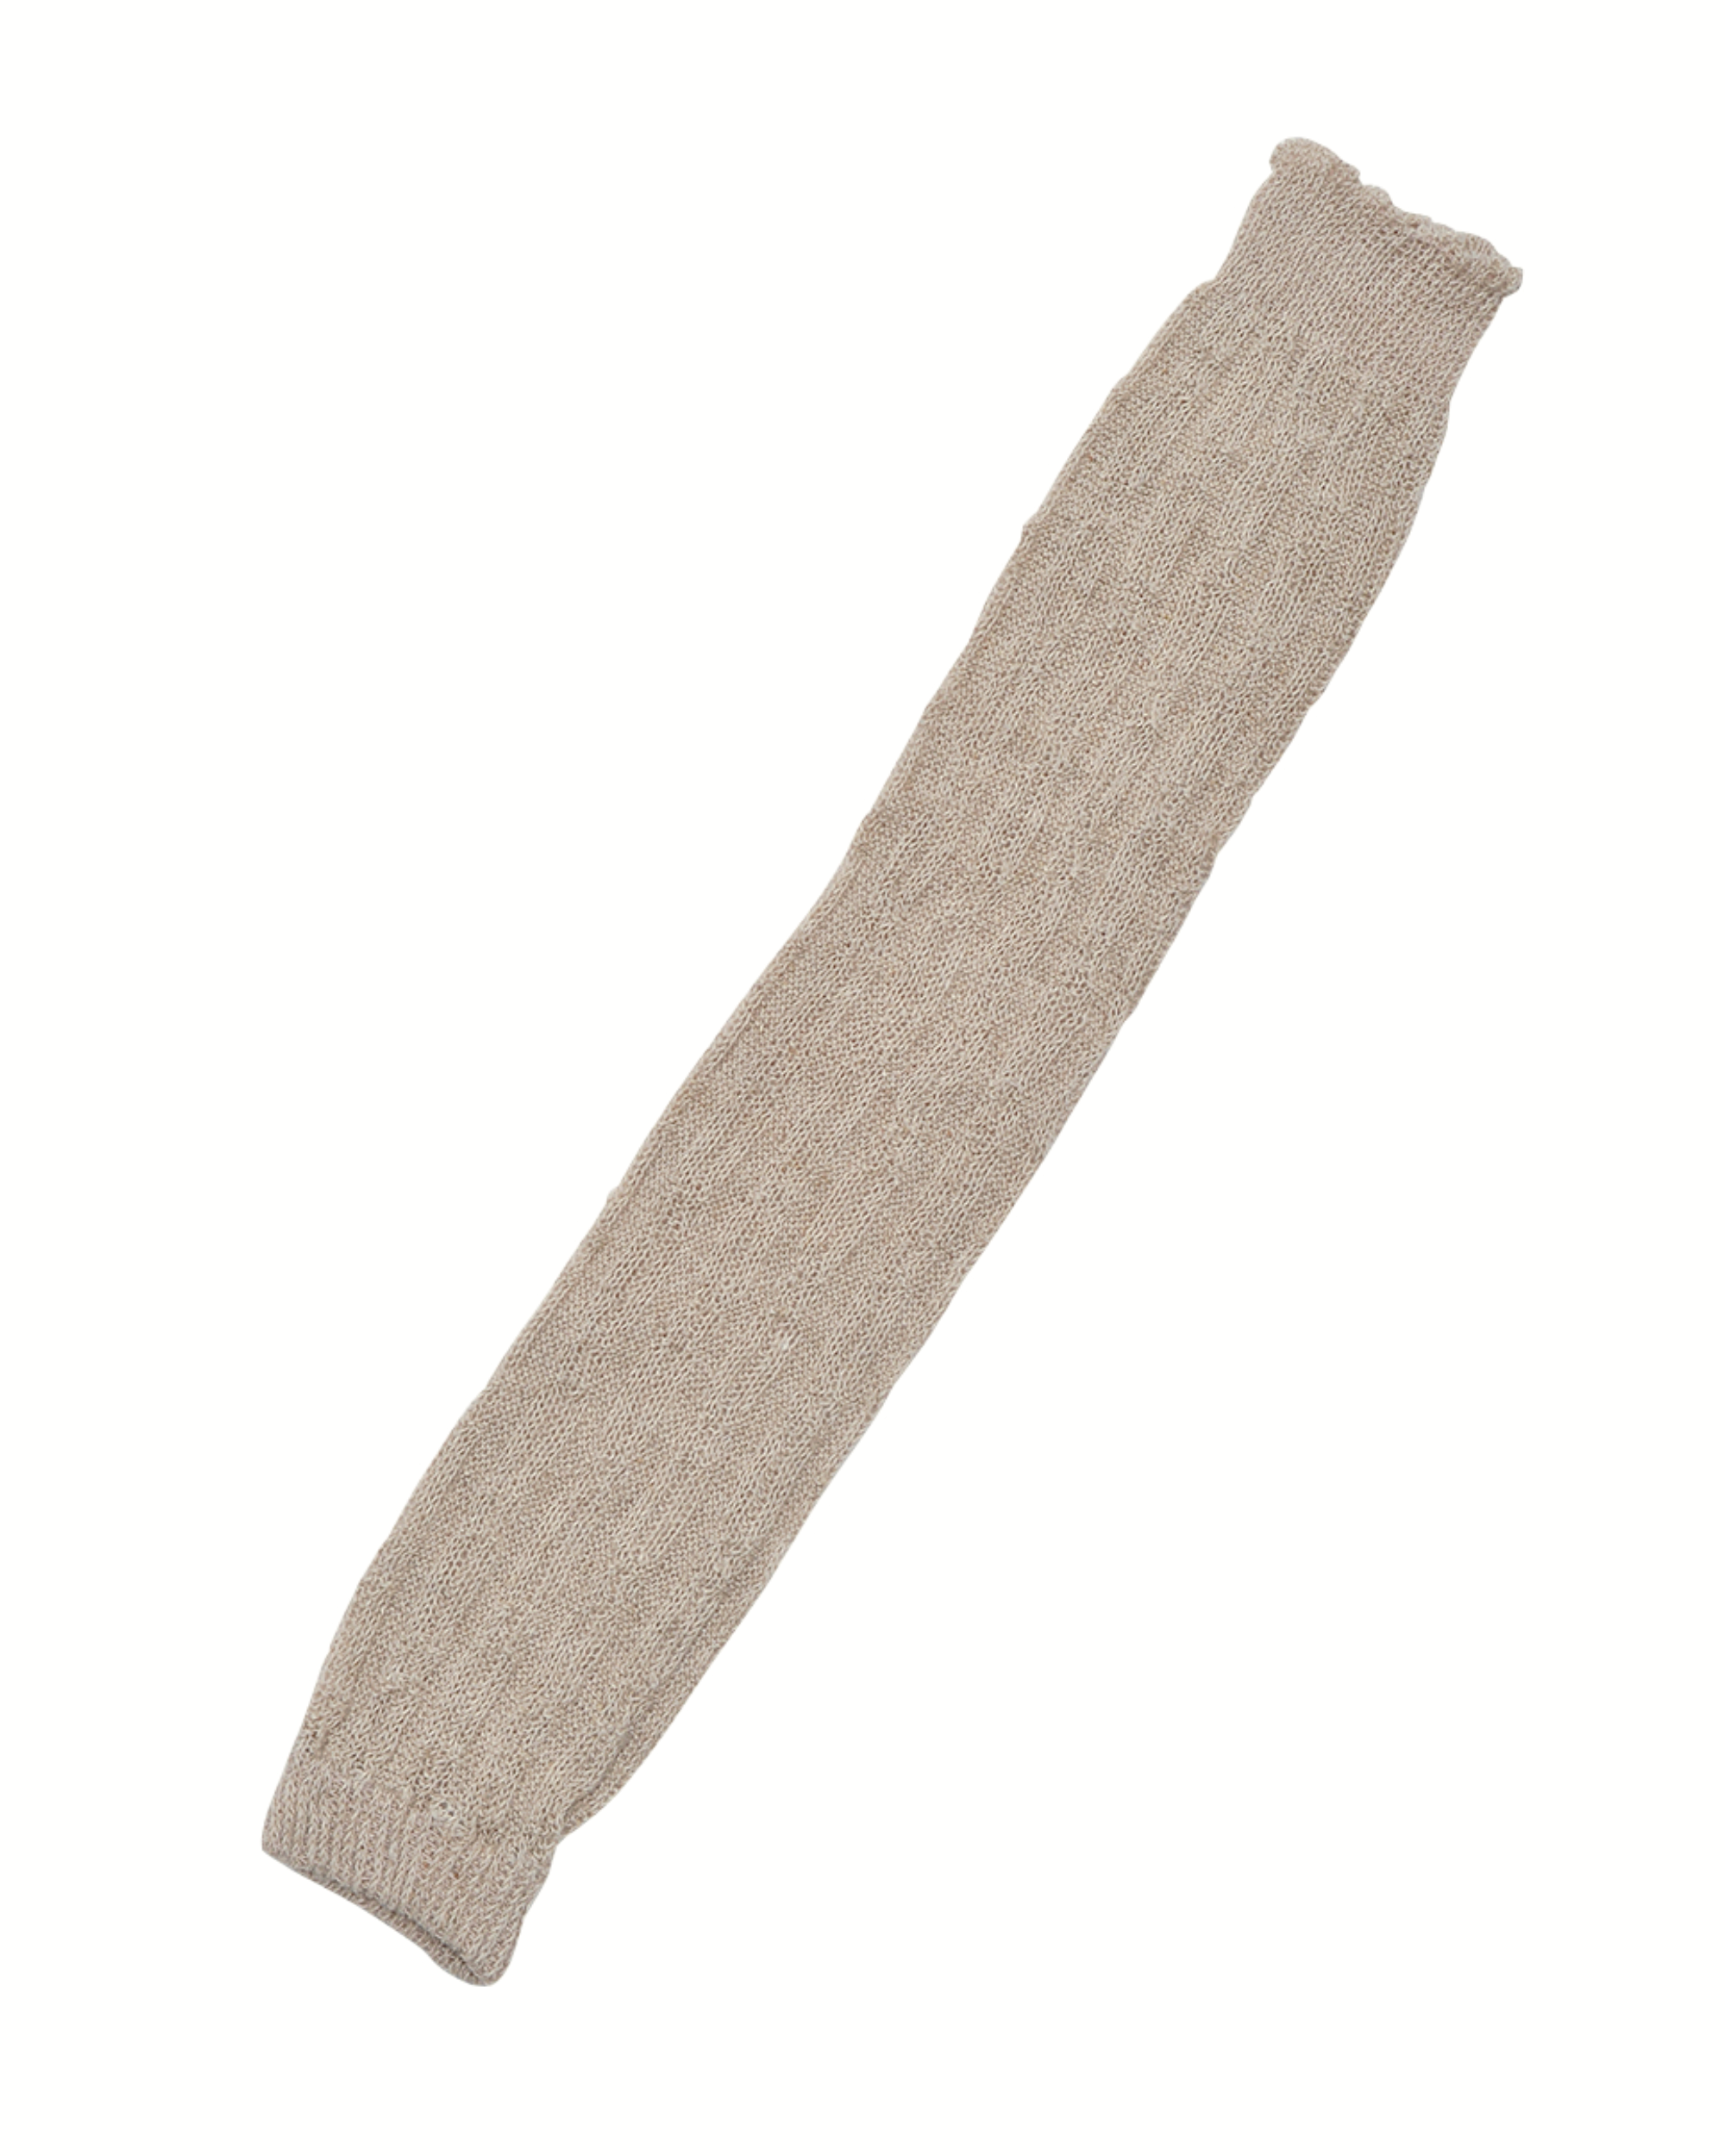 memeri : linen ramie arm and leg warmers for the maker hobart